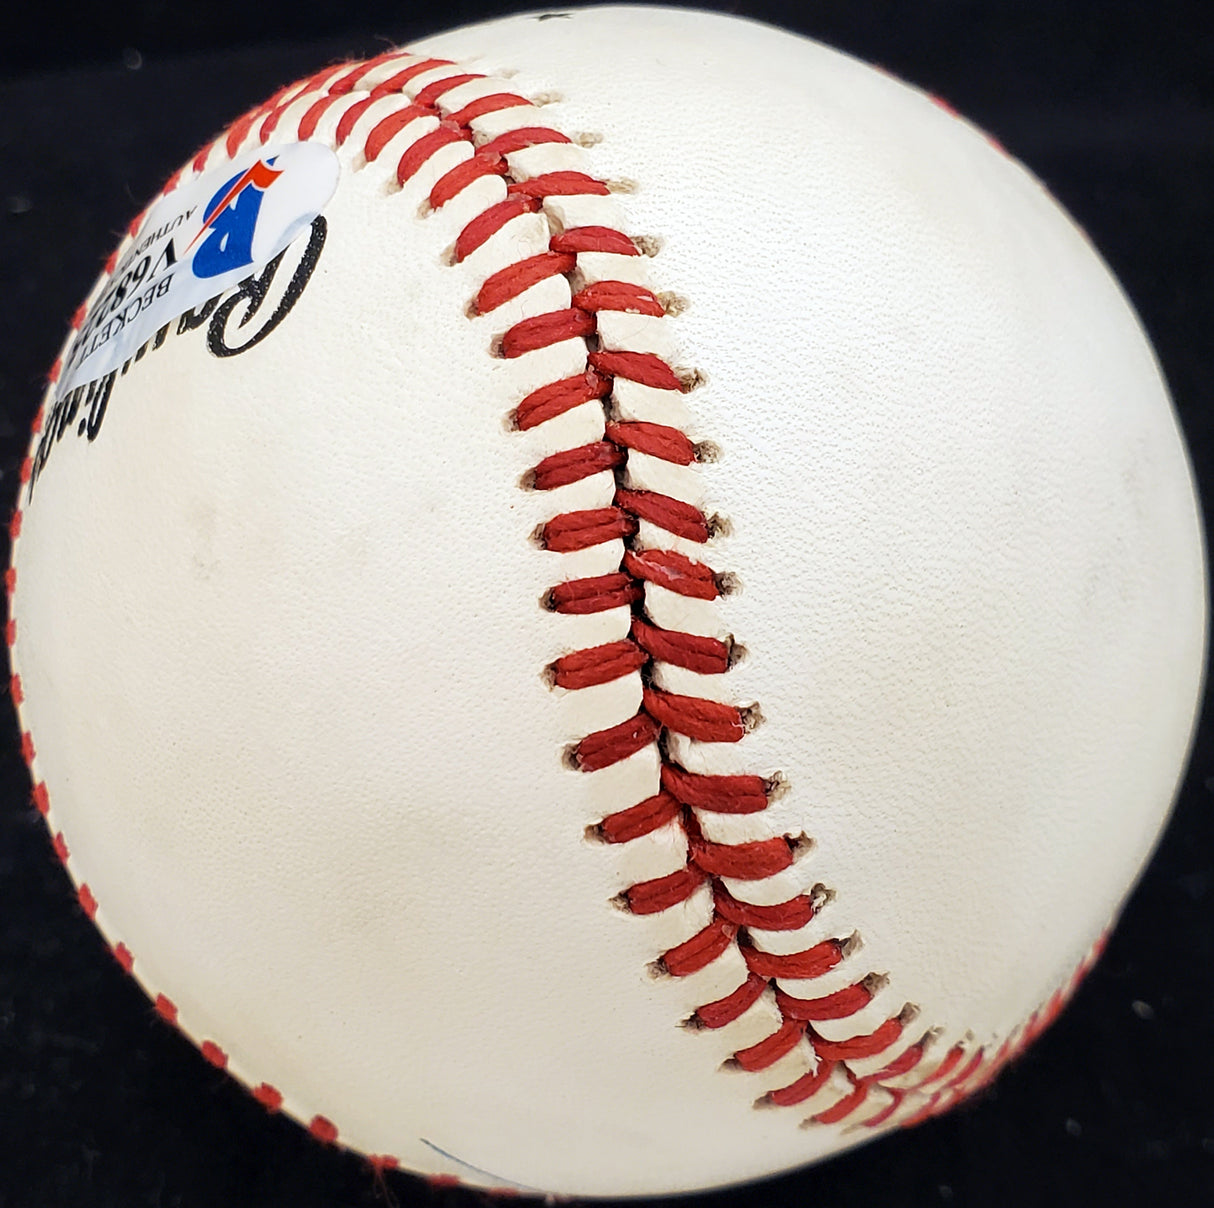 Frank Hoerst Autographed Official NL Baseball Philadelphia Phillies Beckett BAS #V68225